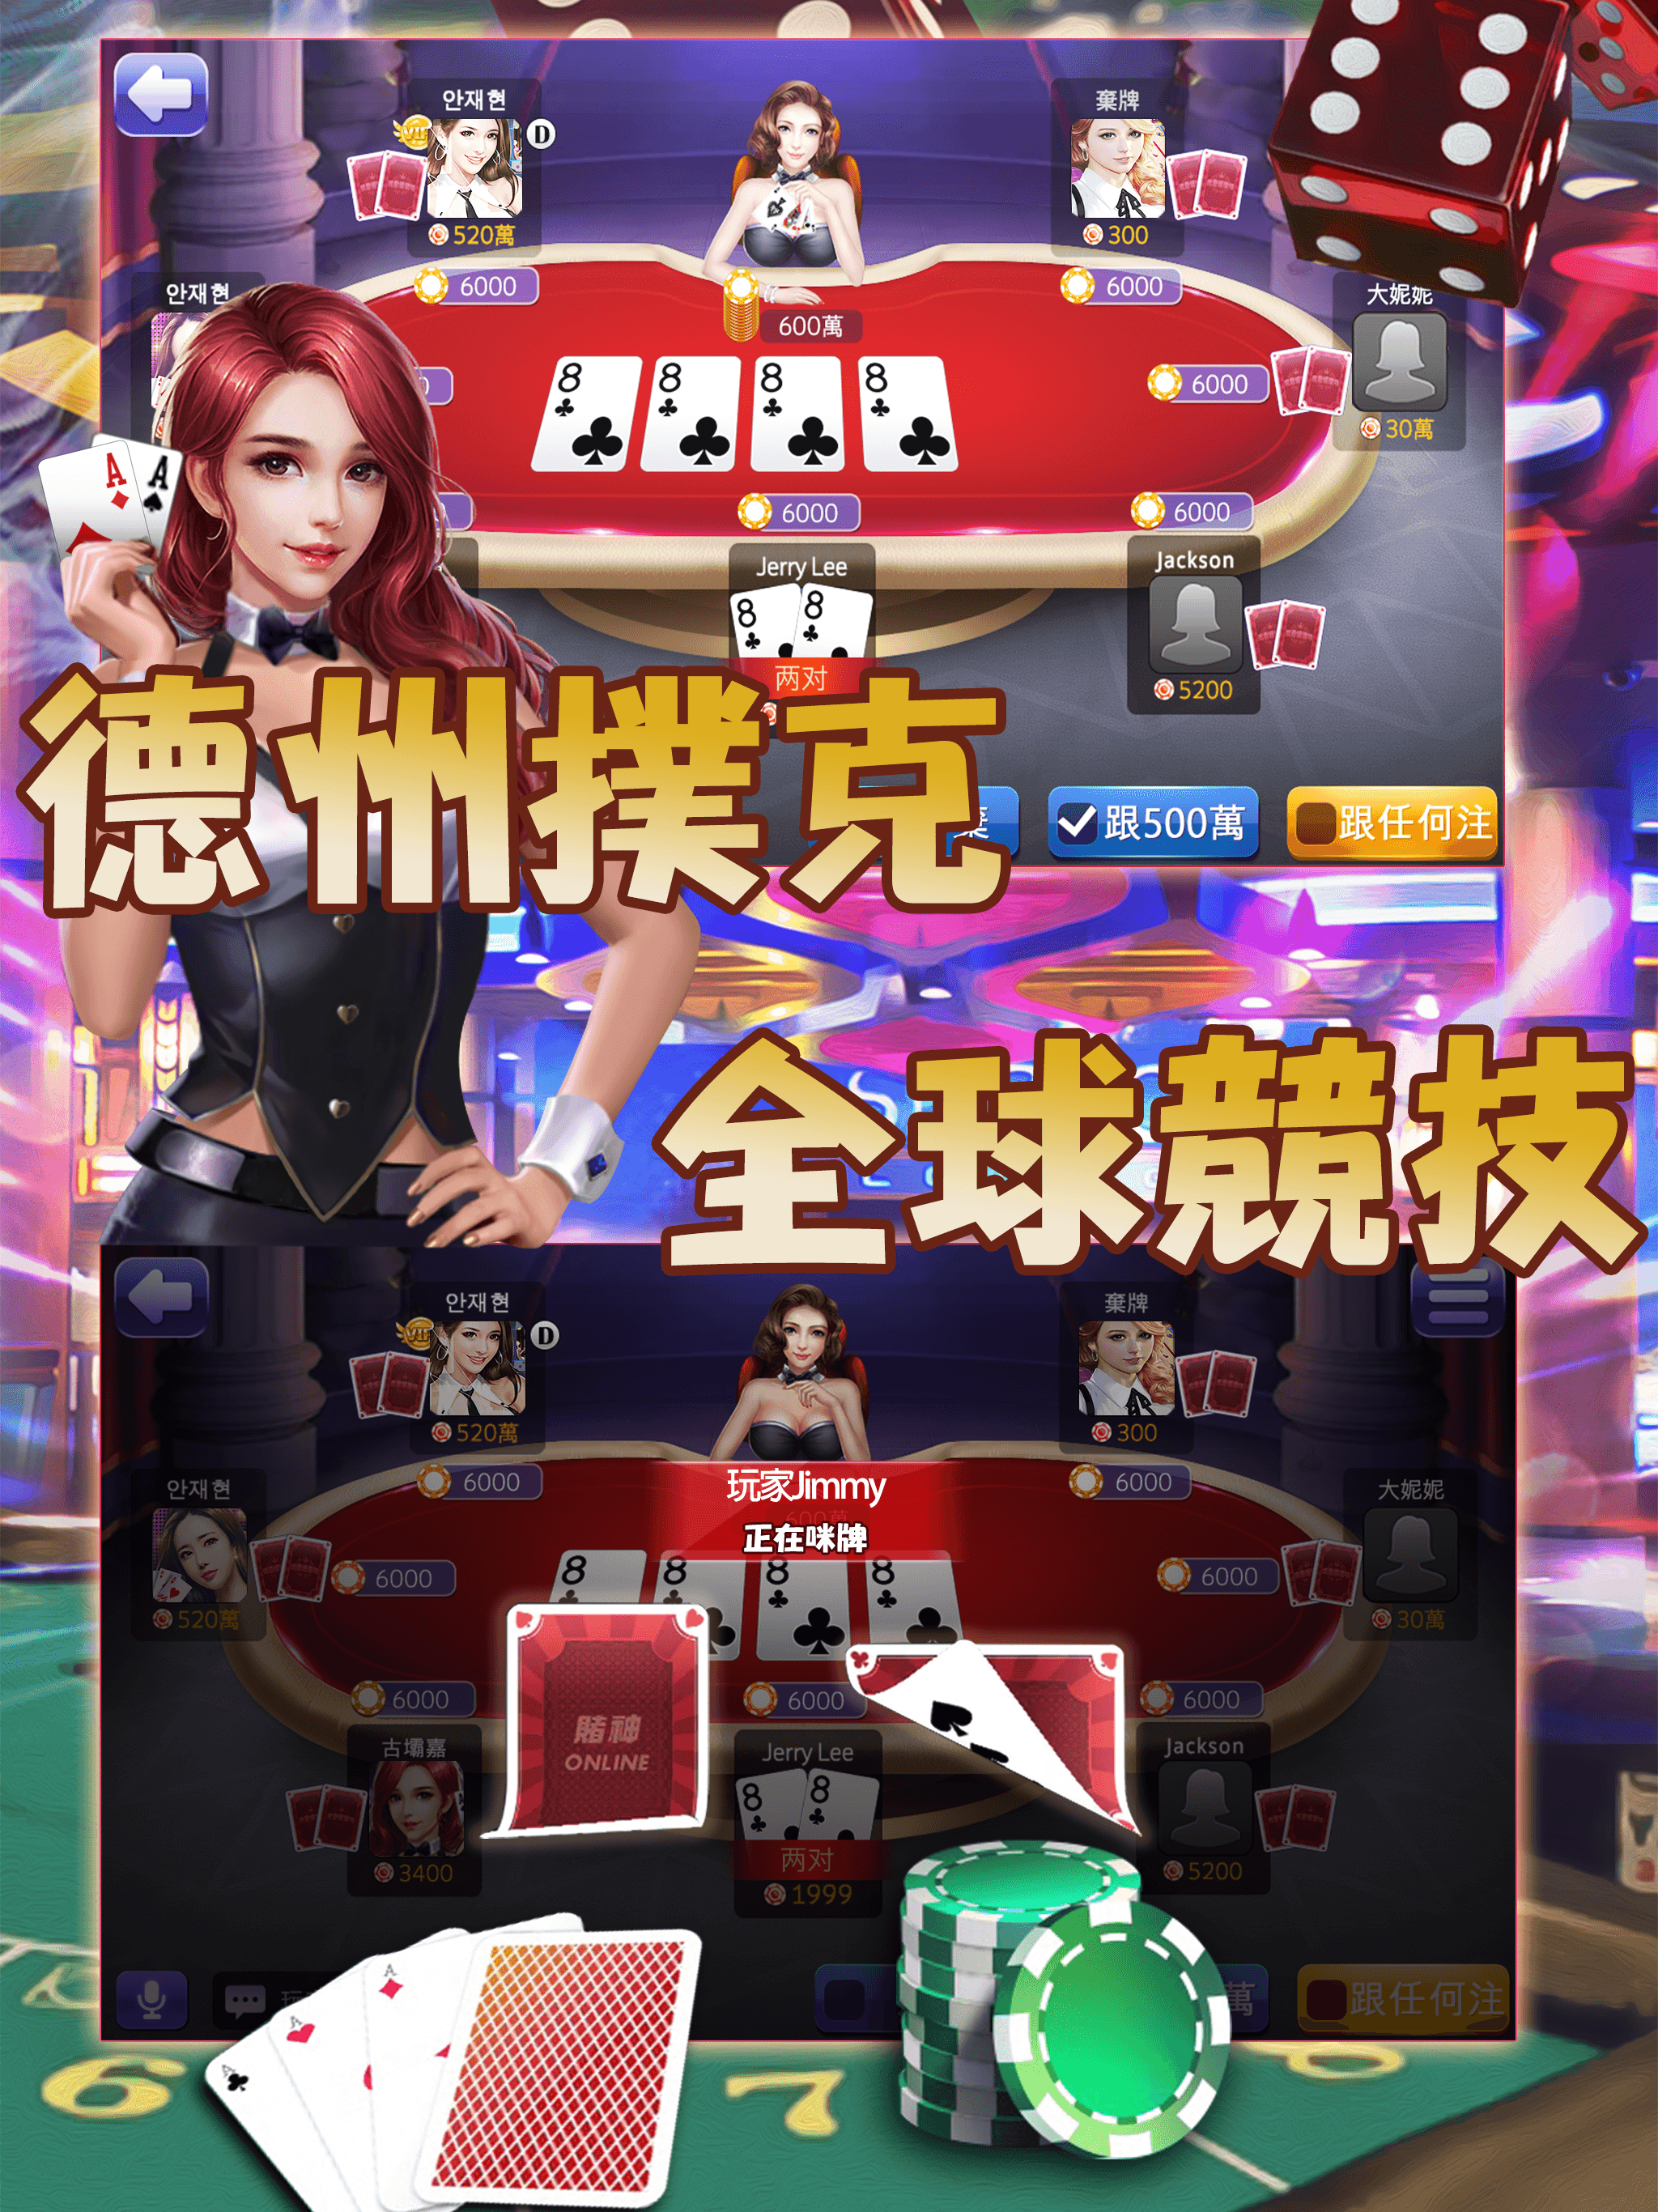 Rich Casino App Download